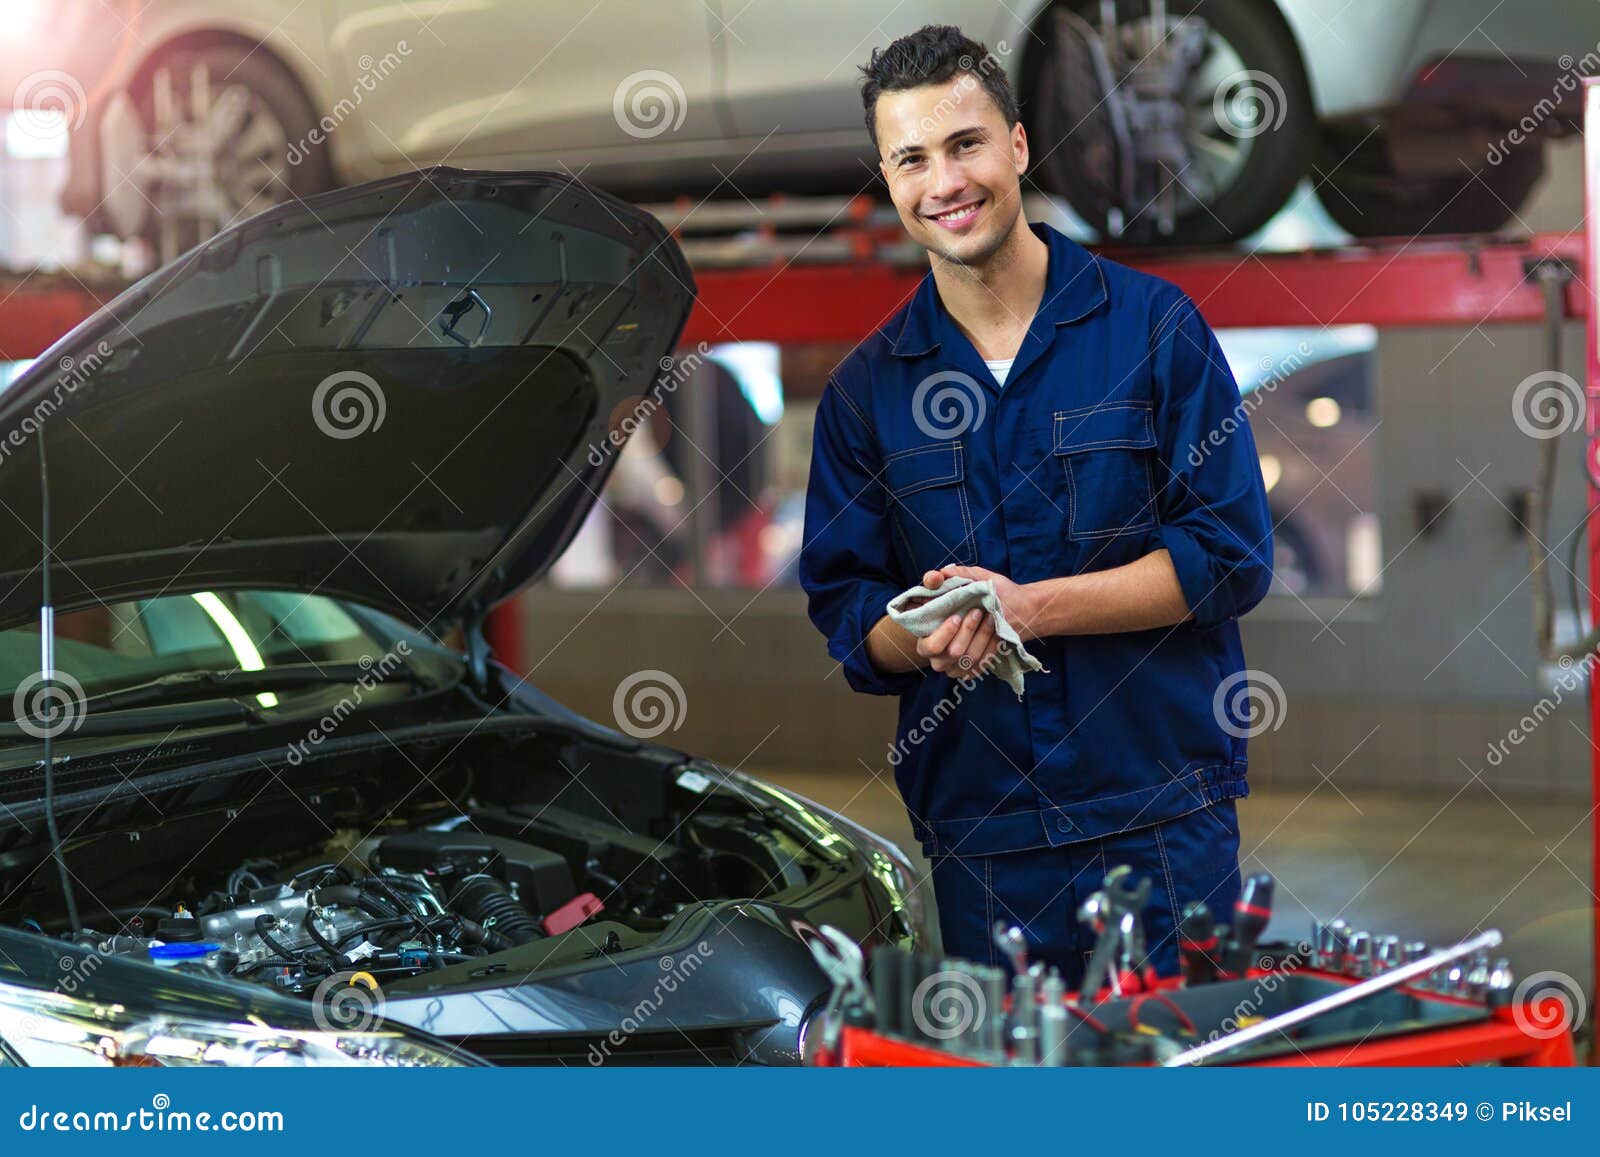 car mechanic in auto repair shop